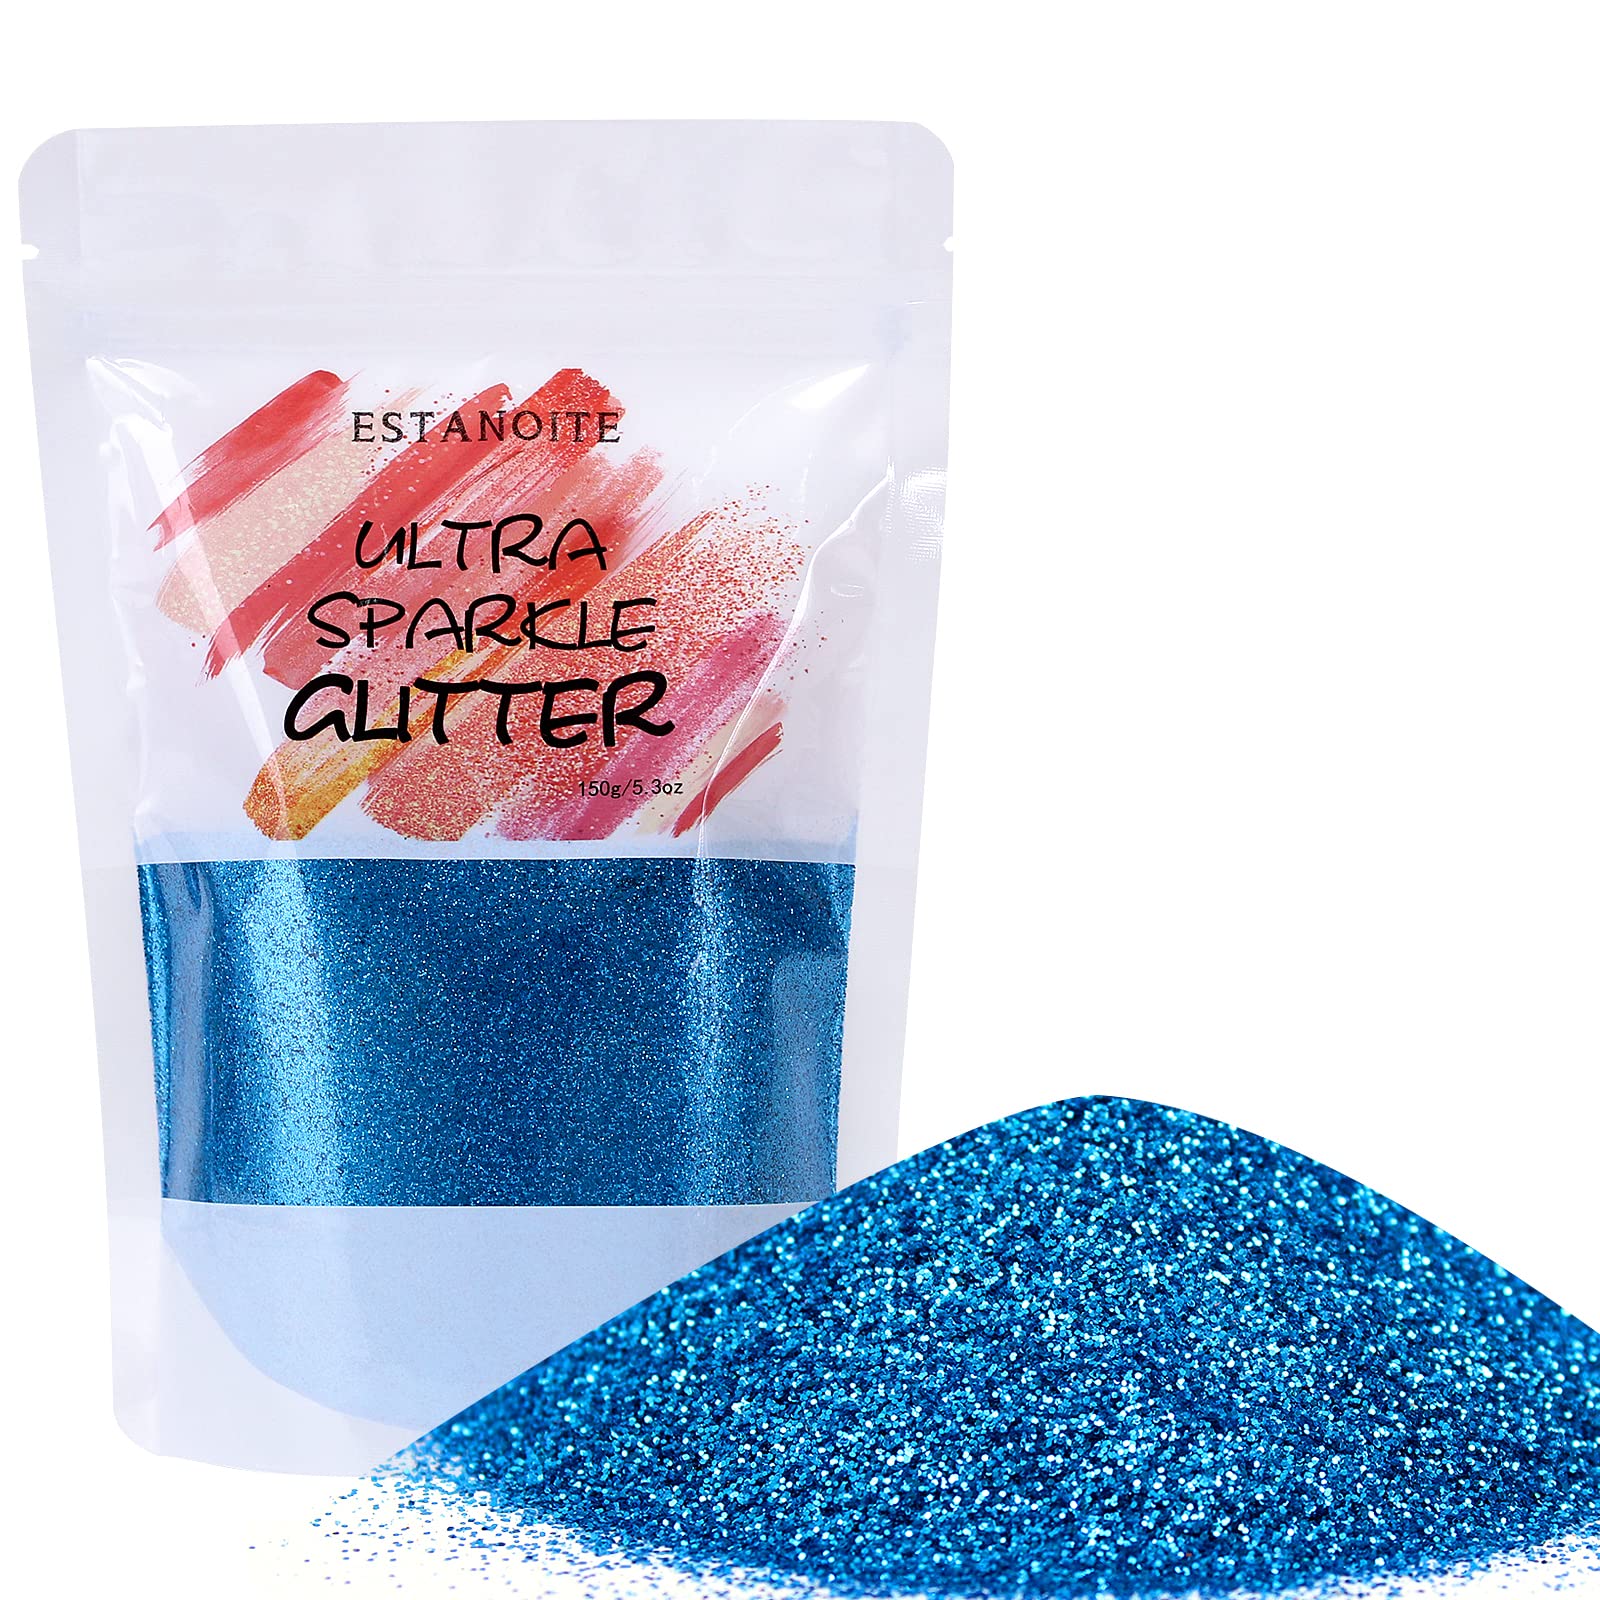 Estanoite cosmetic grade glitter, 150g Holographic glitter for Nail Eye Face Body Hair, Multi Purpose Metallic Fine glitters for Body Make